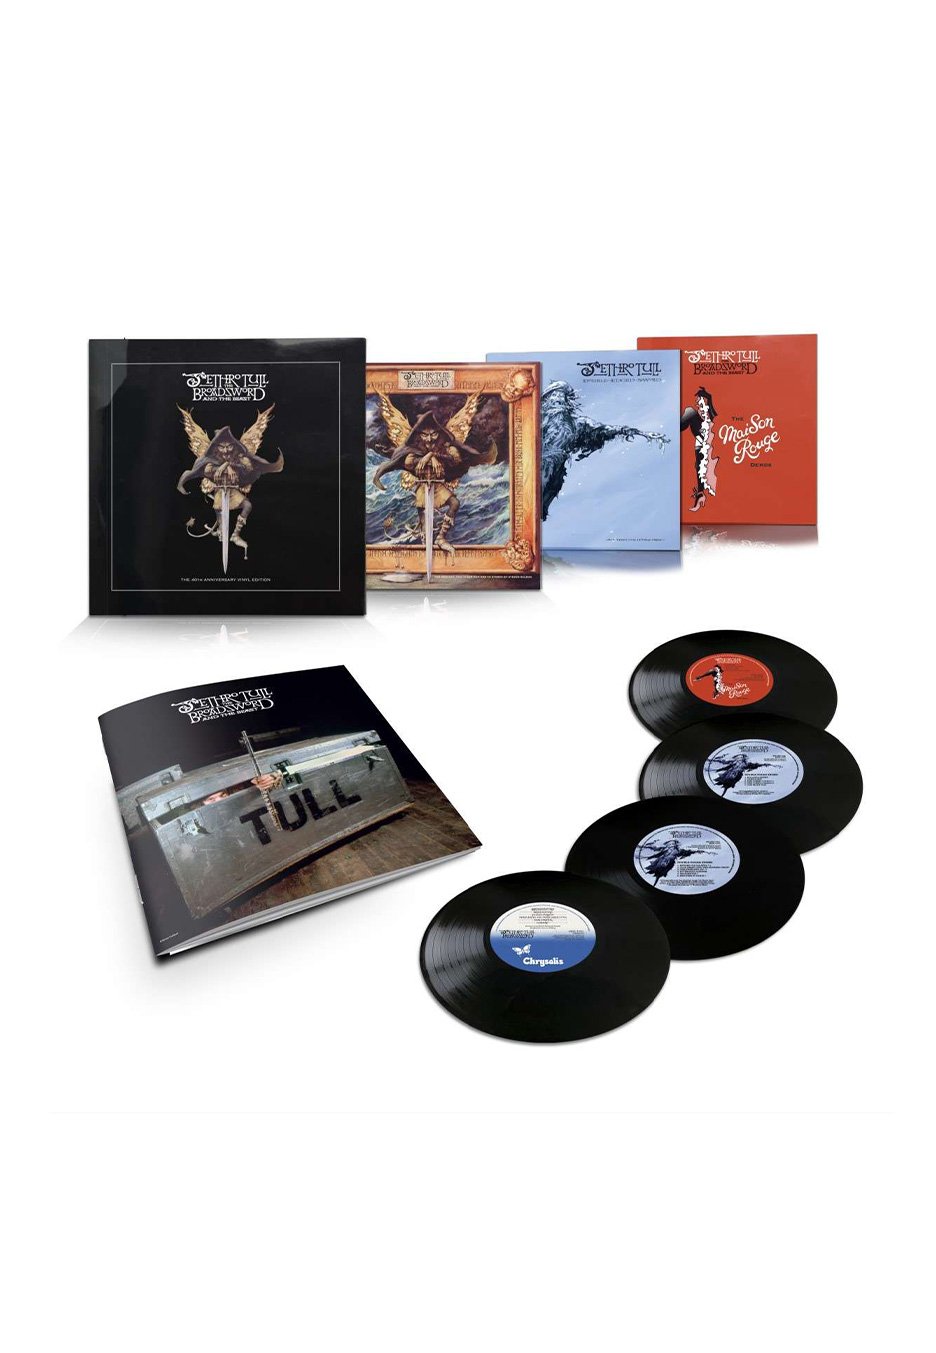 Jethro Tull - The Broadsword And The Beast (The 40 Anniversary) - 4 Vinyl Boxset